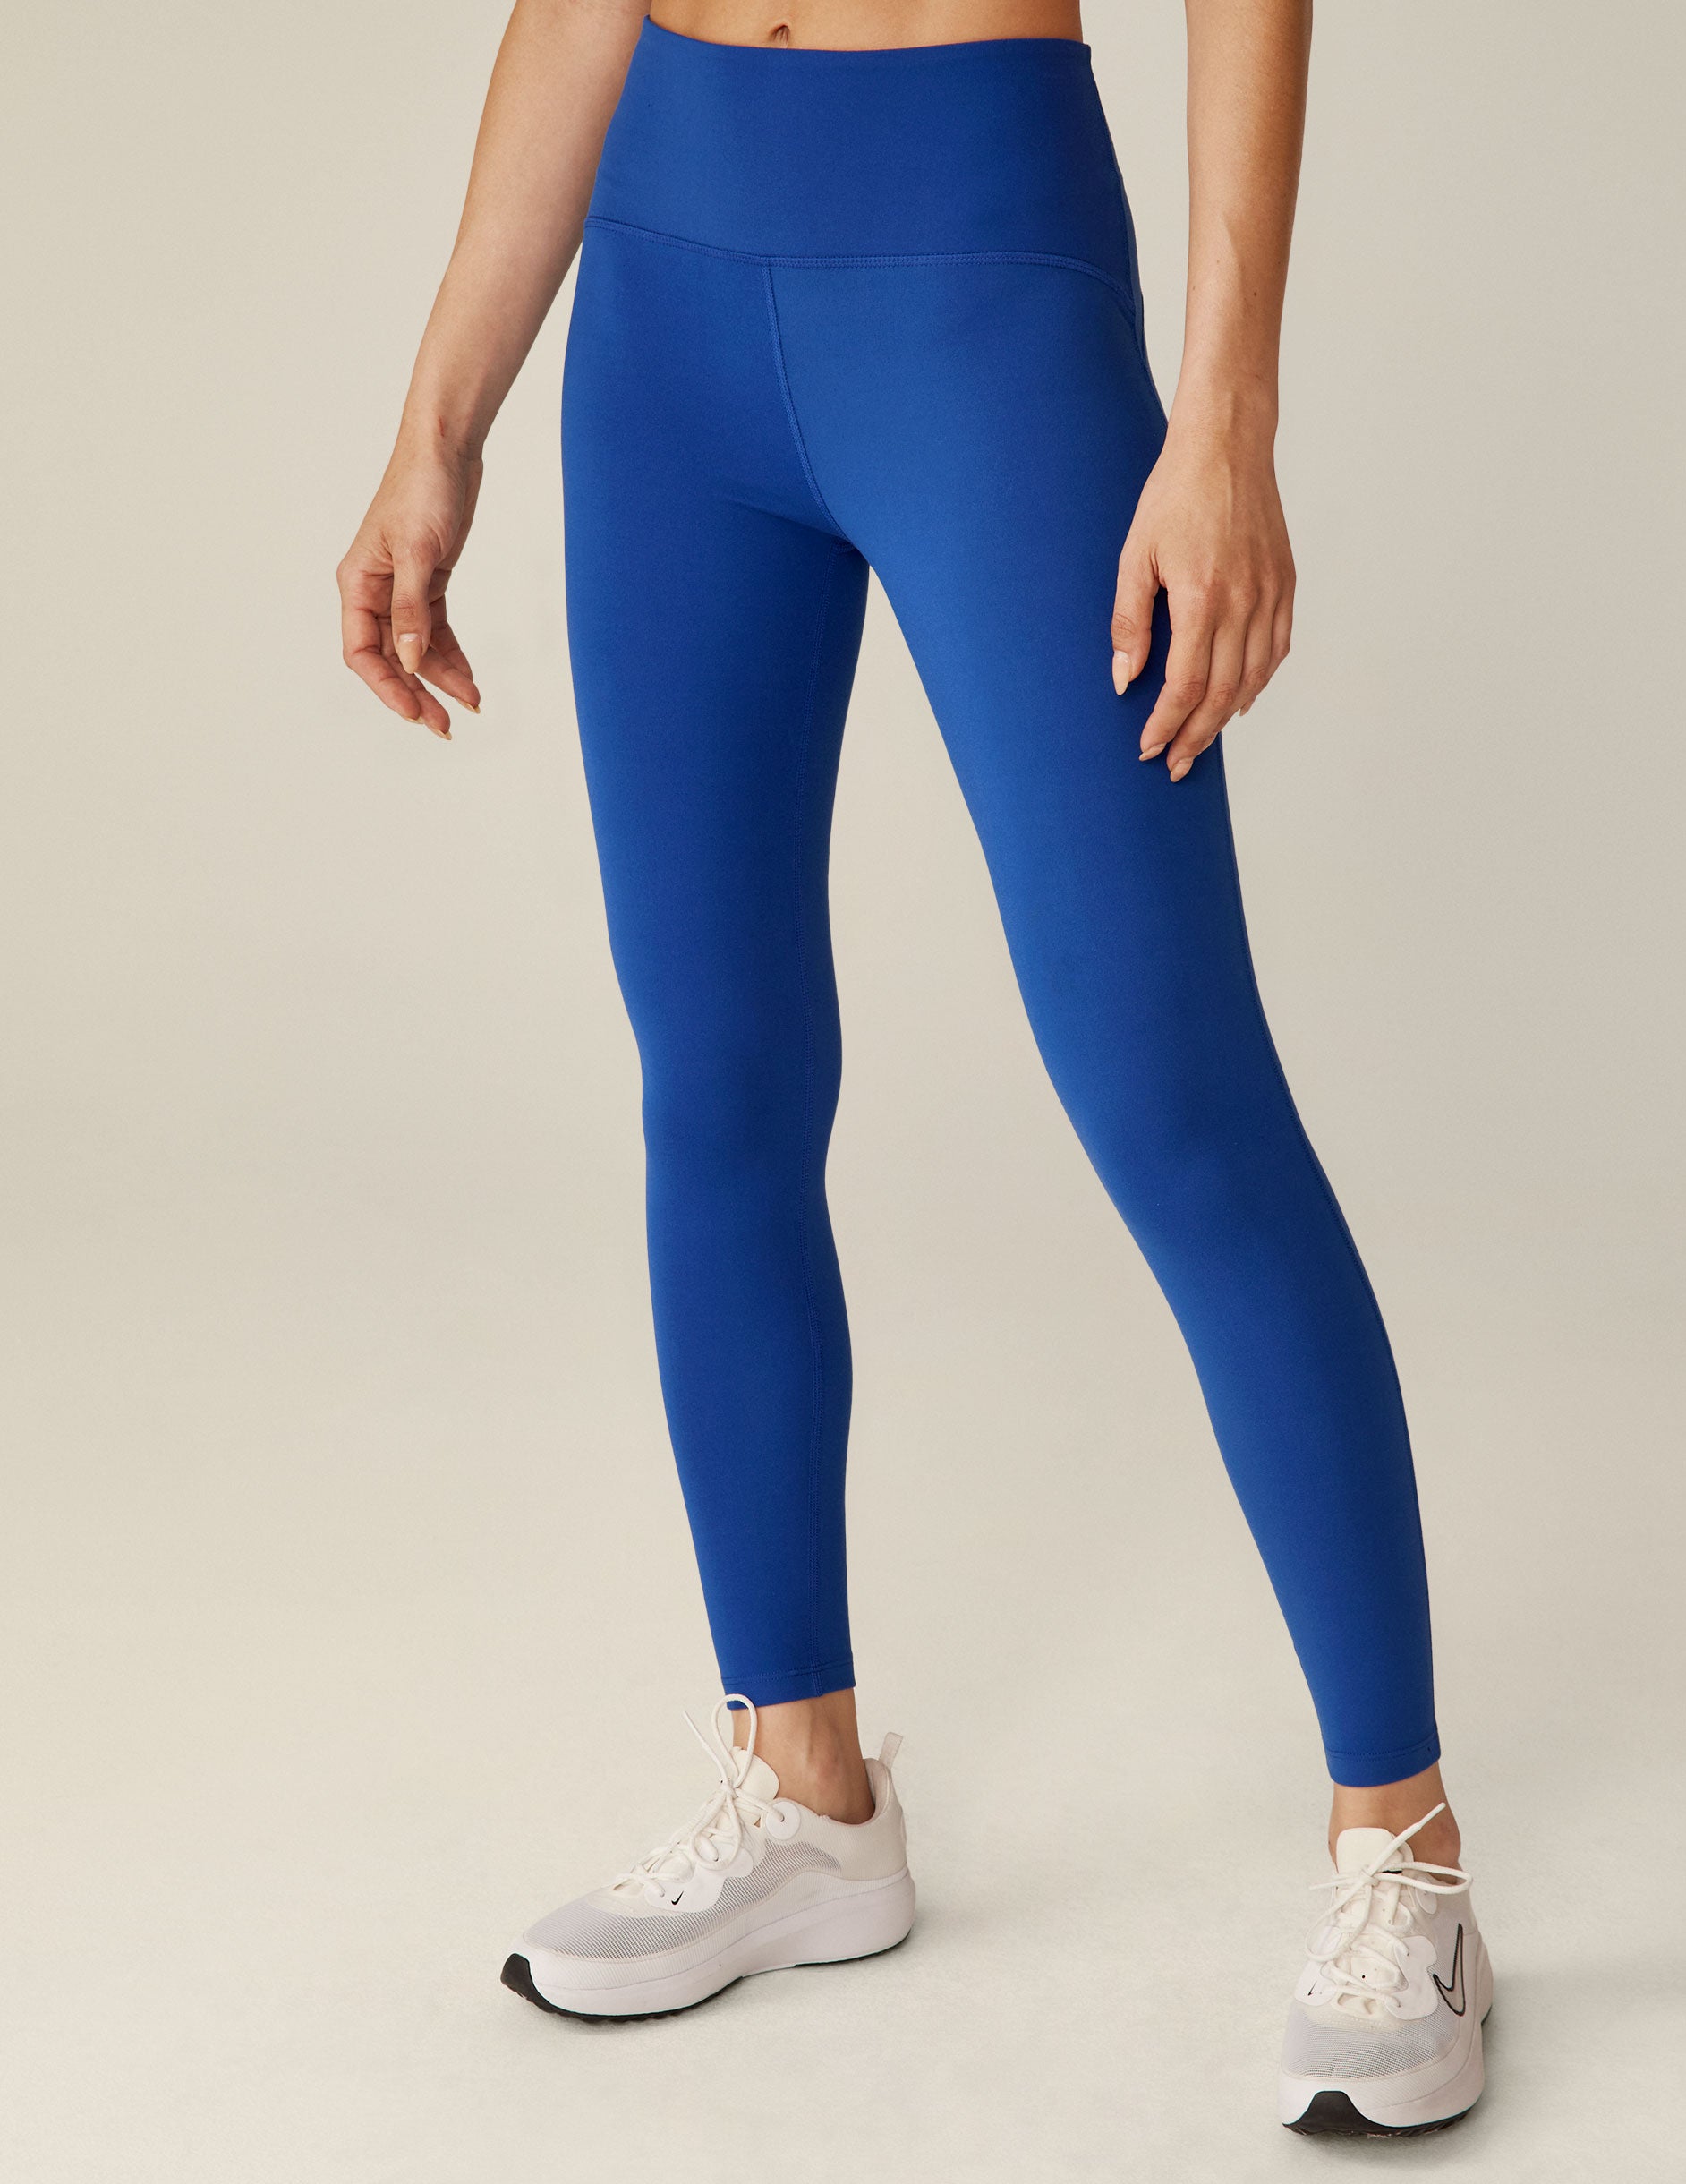 blue 4" waisted midi leggings. 